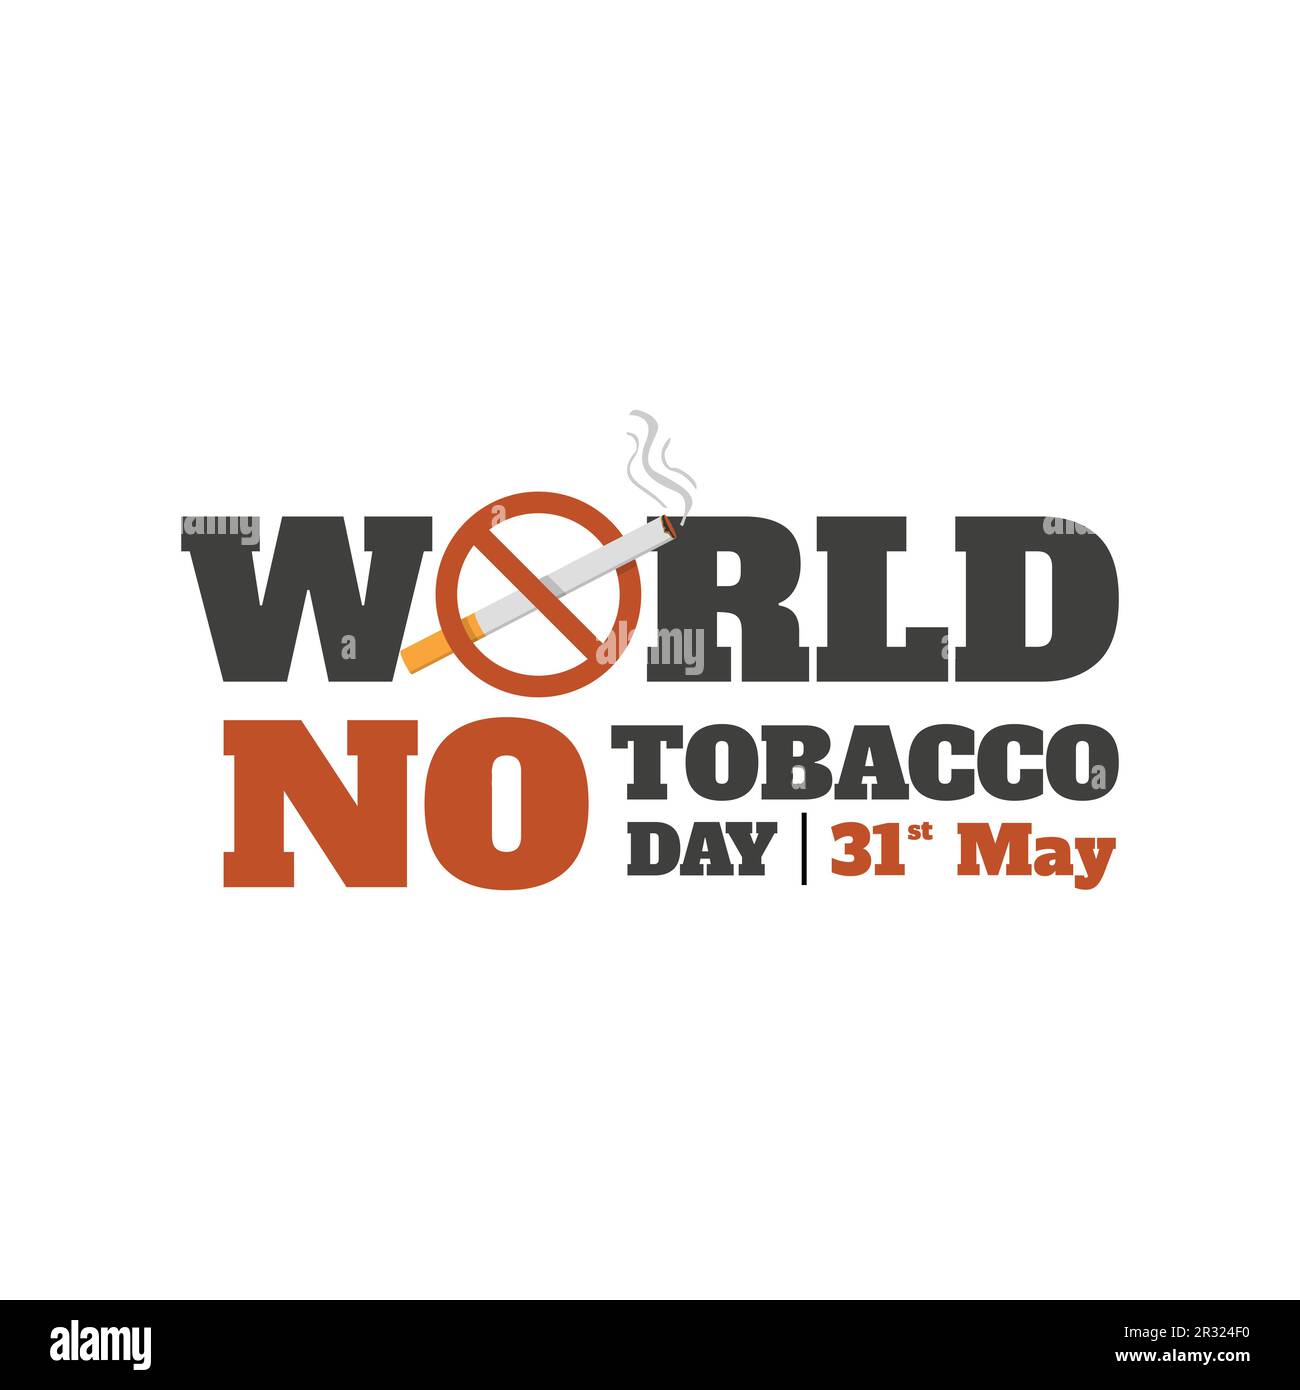 Welt kein Tabak Tag Vektorbild. Vektorbild, Poster oder Banner für Welt kein Tabak Tag. Stoppen Sie den Tabak Stock Vektor